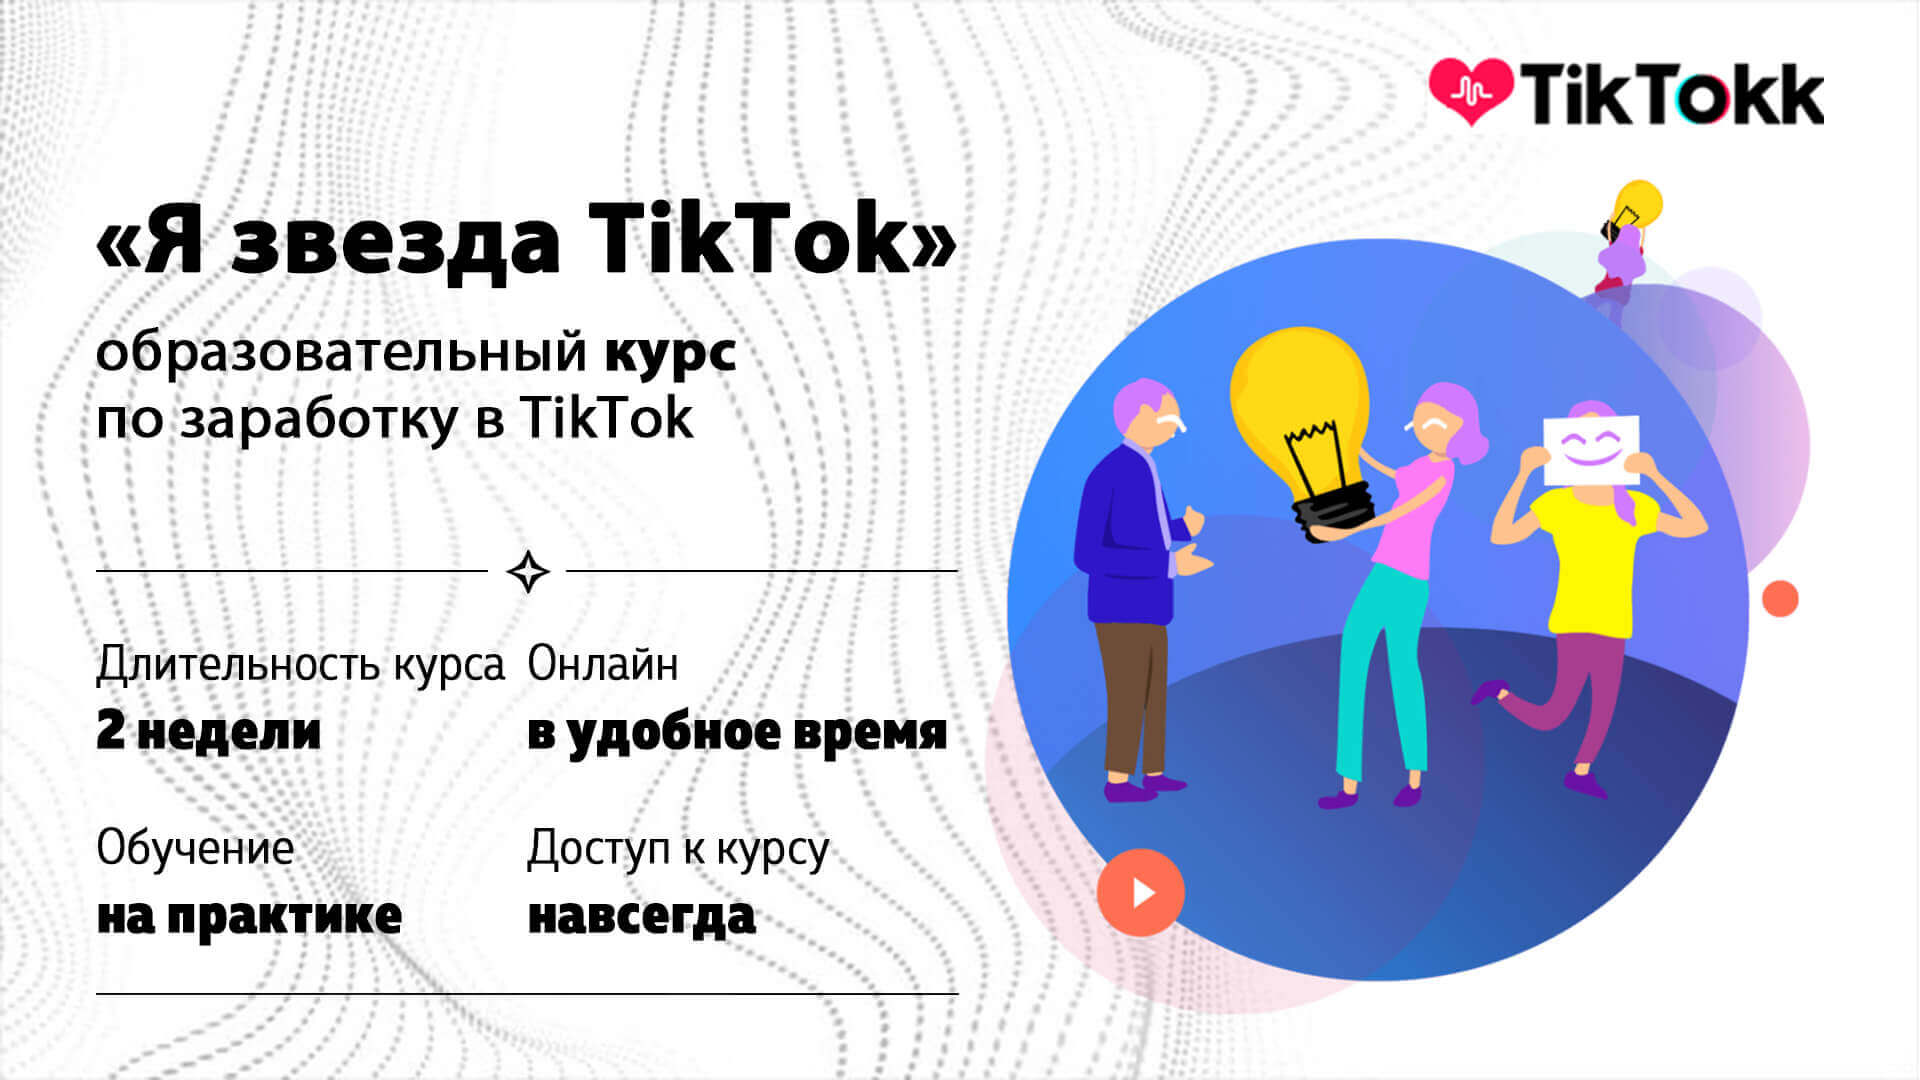 Tiktokk.ru — Я звезда TikTok